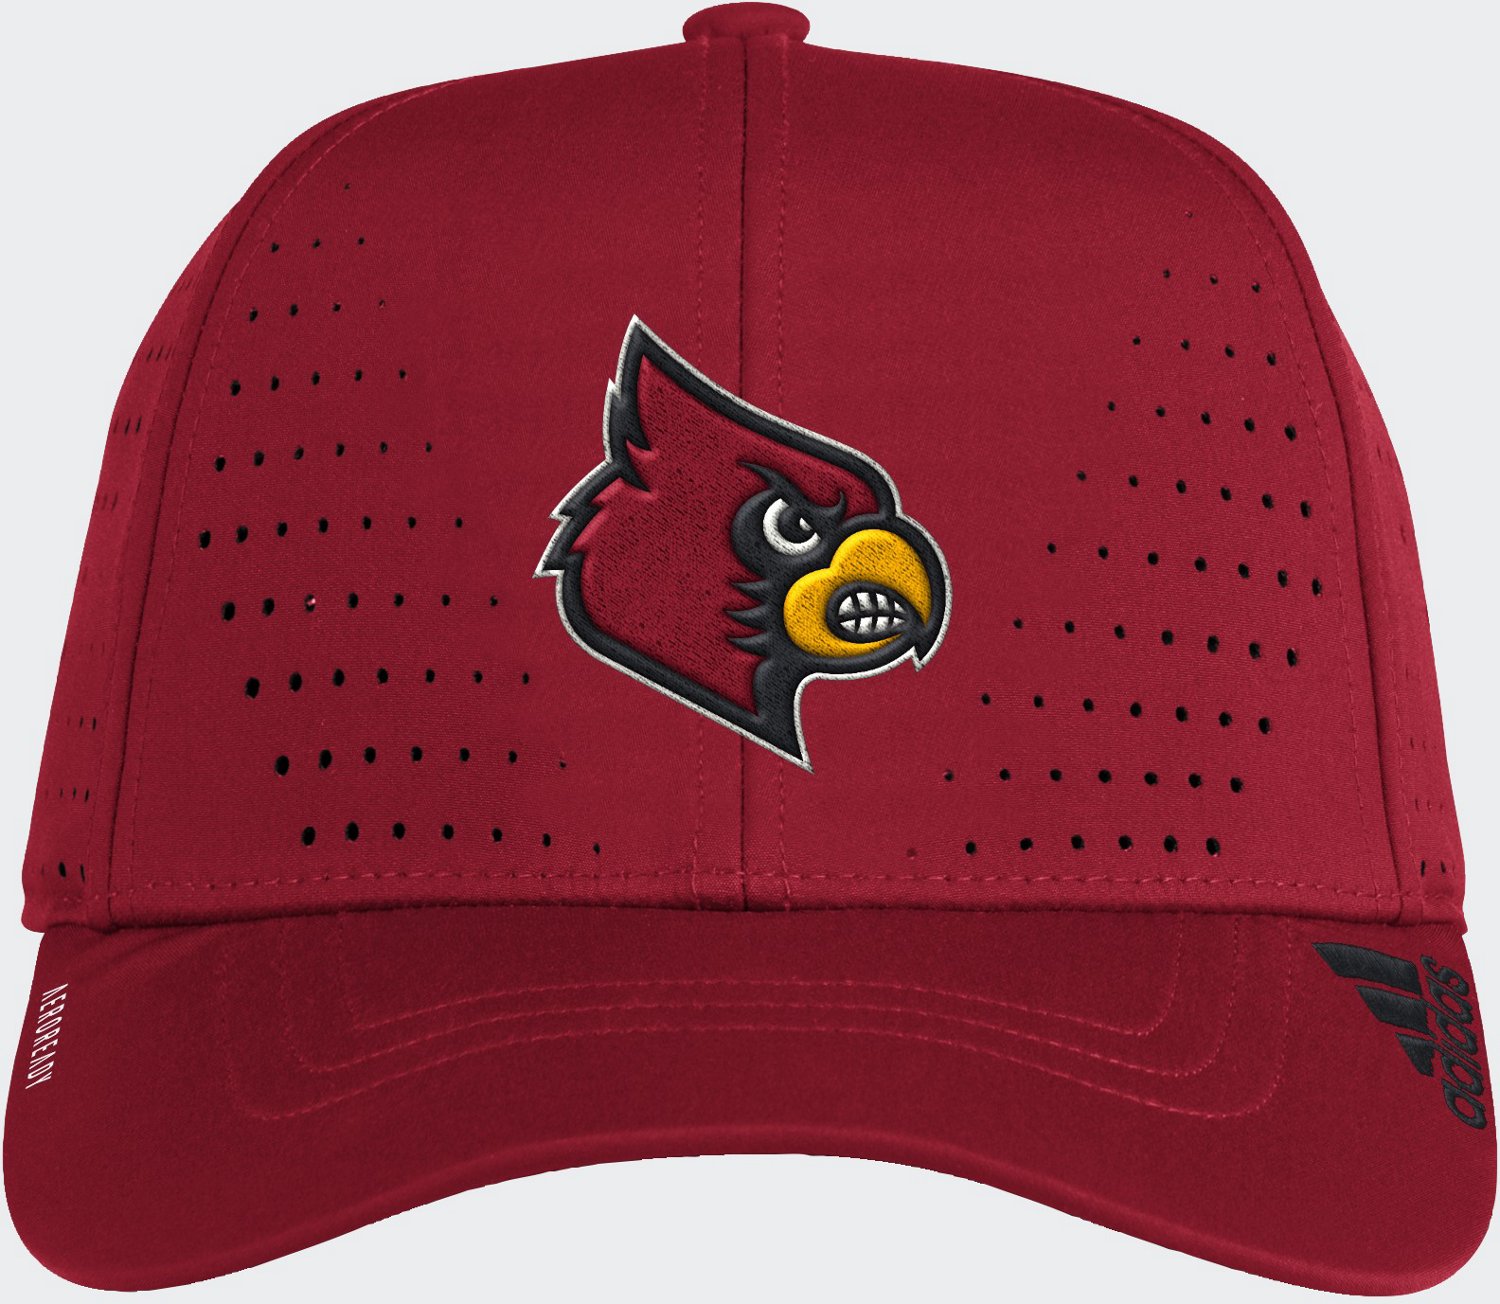 University of Louisville Pride Adjustable Cap | Legacy Apparel | One Size | Black | Hat/Adjustable